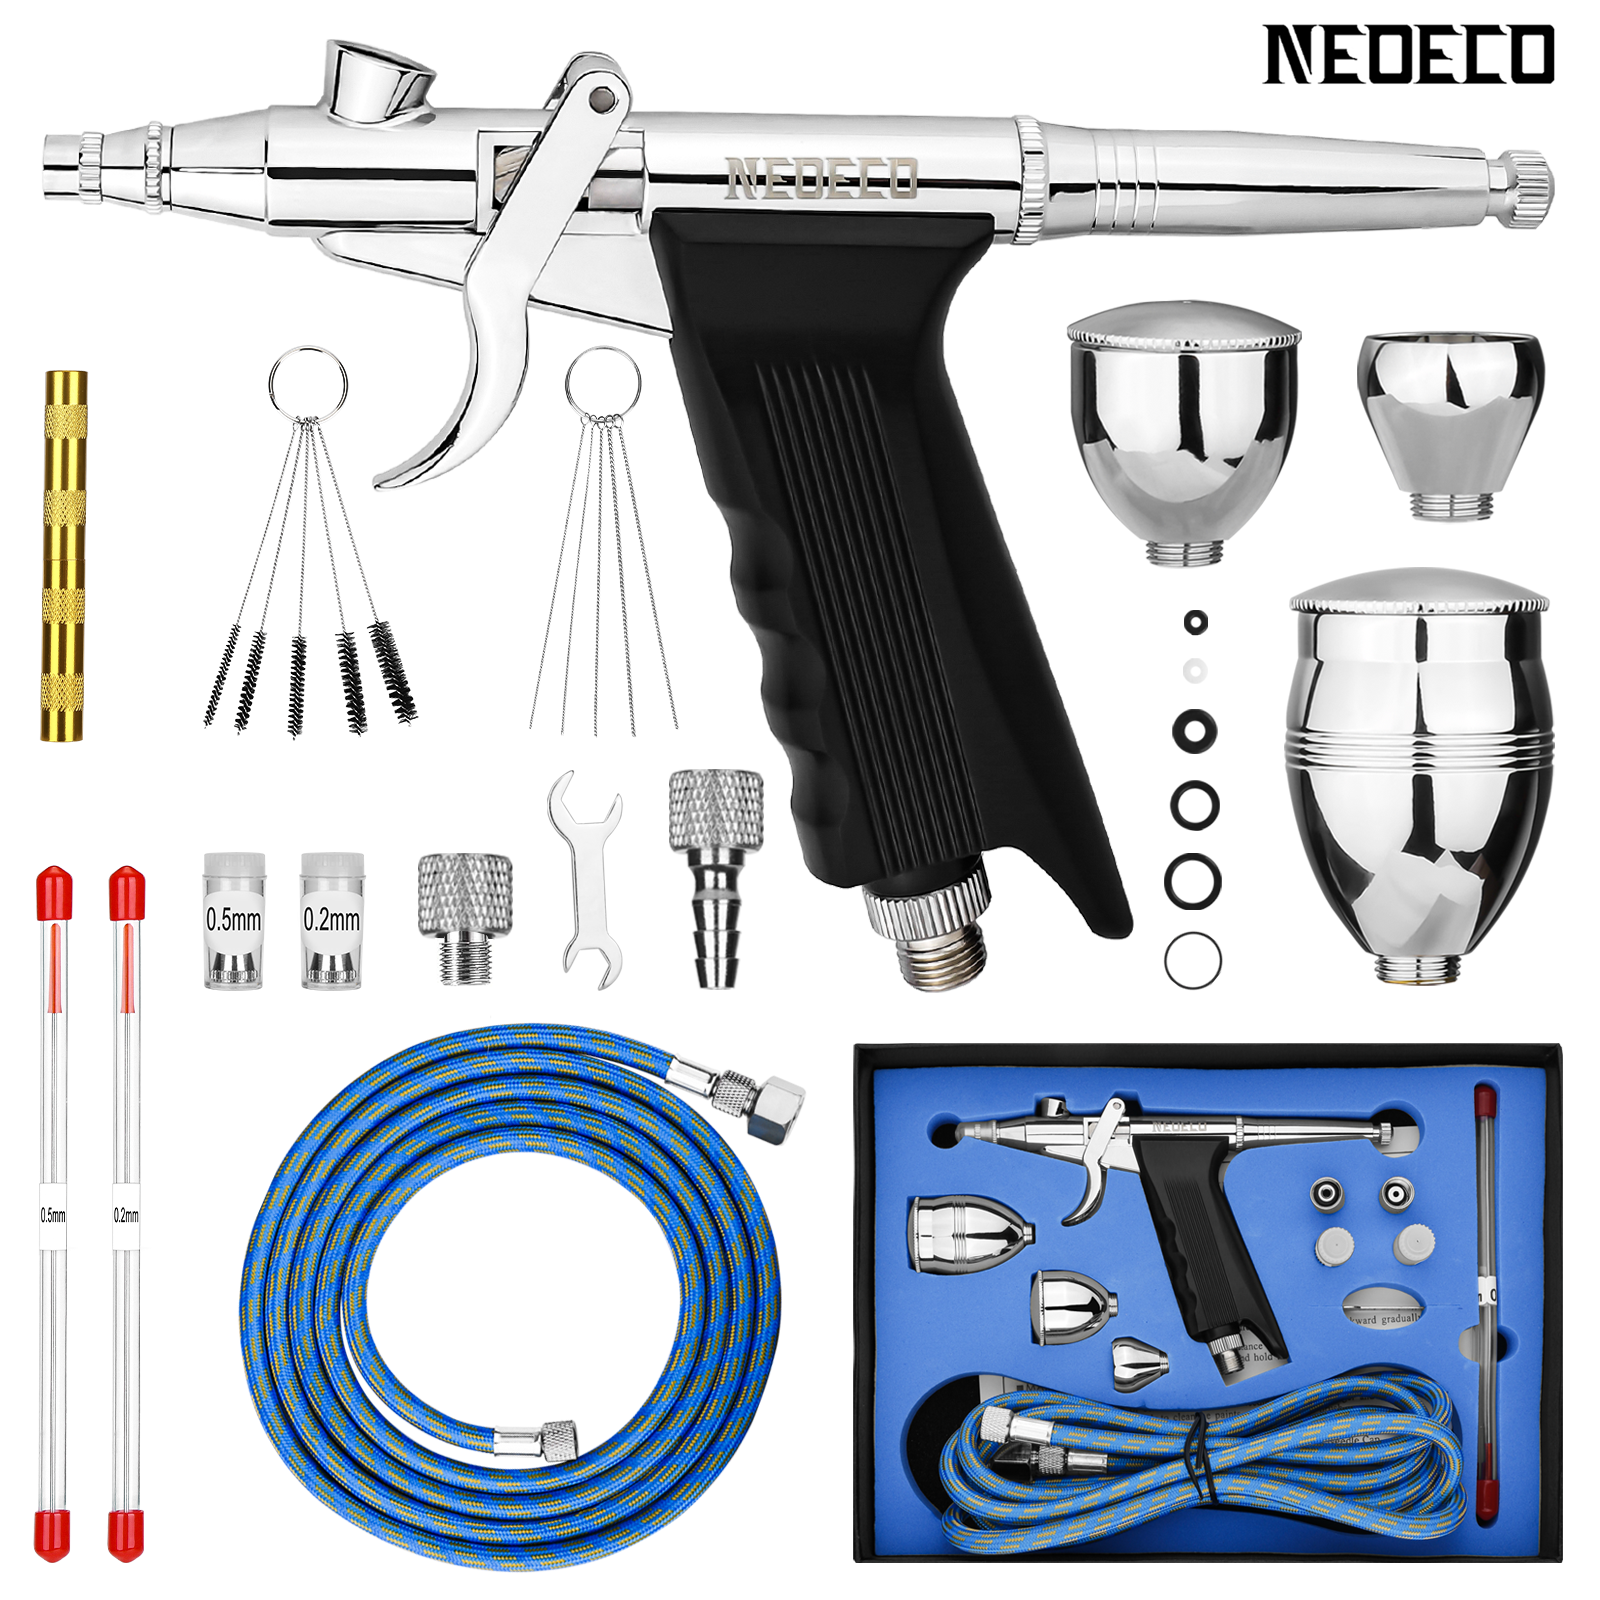 NEOECO NCT-135 Aluminum Lightweight Airbrush Kit